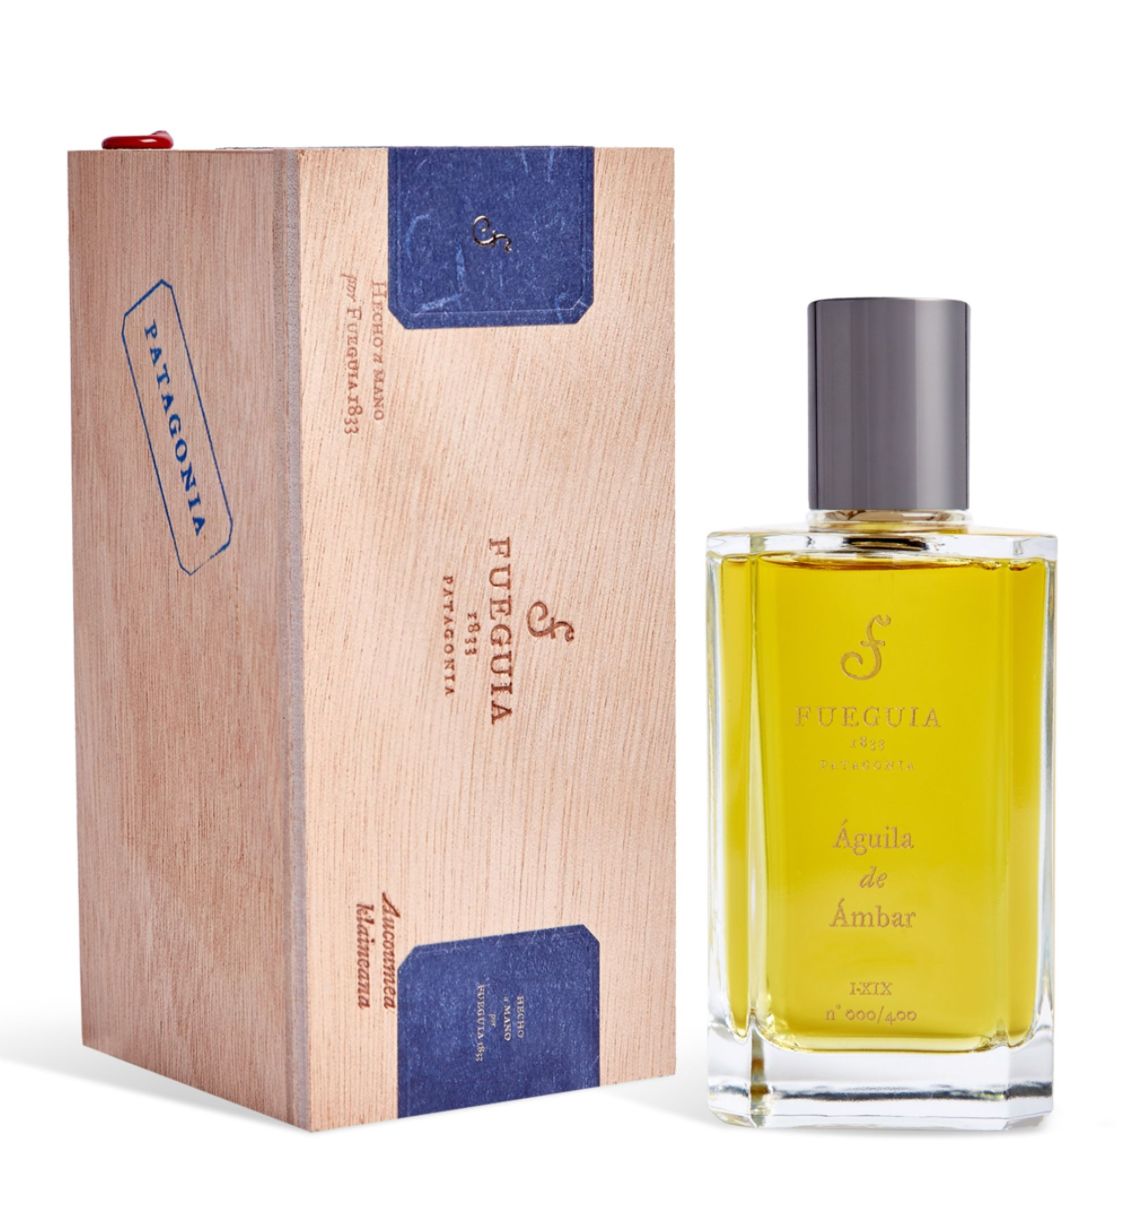 Aguila De Ambar Fueguia 1833 perfume - a fragrance for women and men 2019